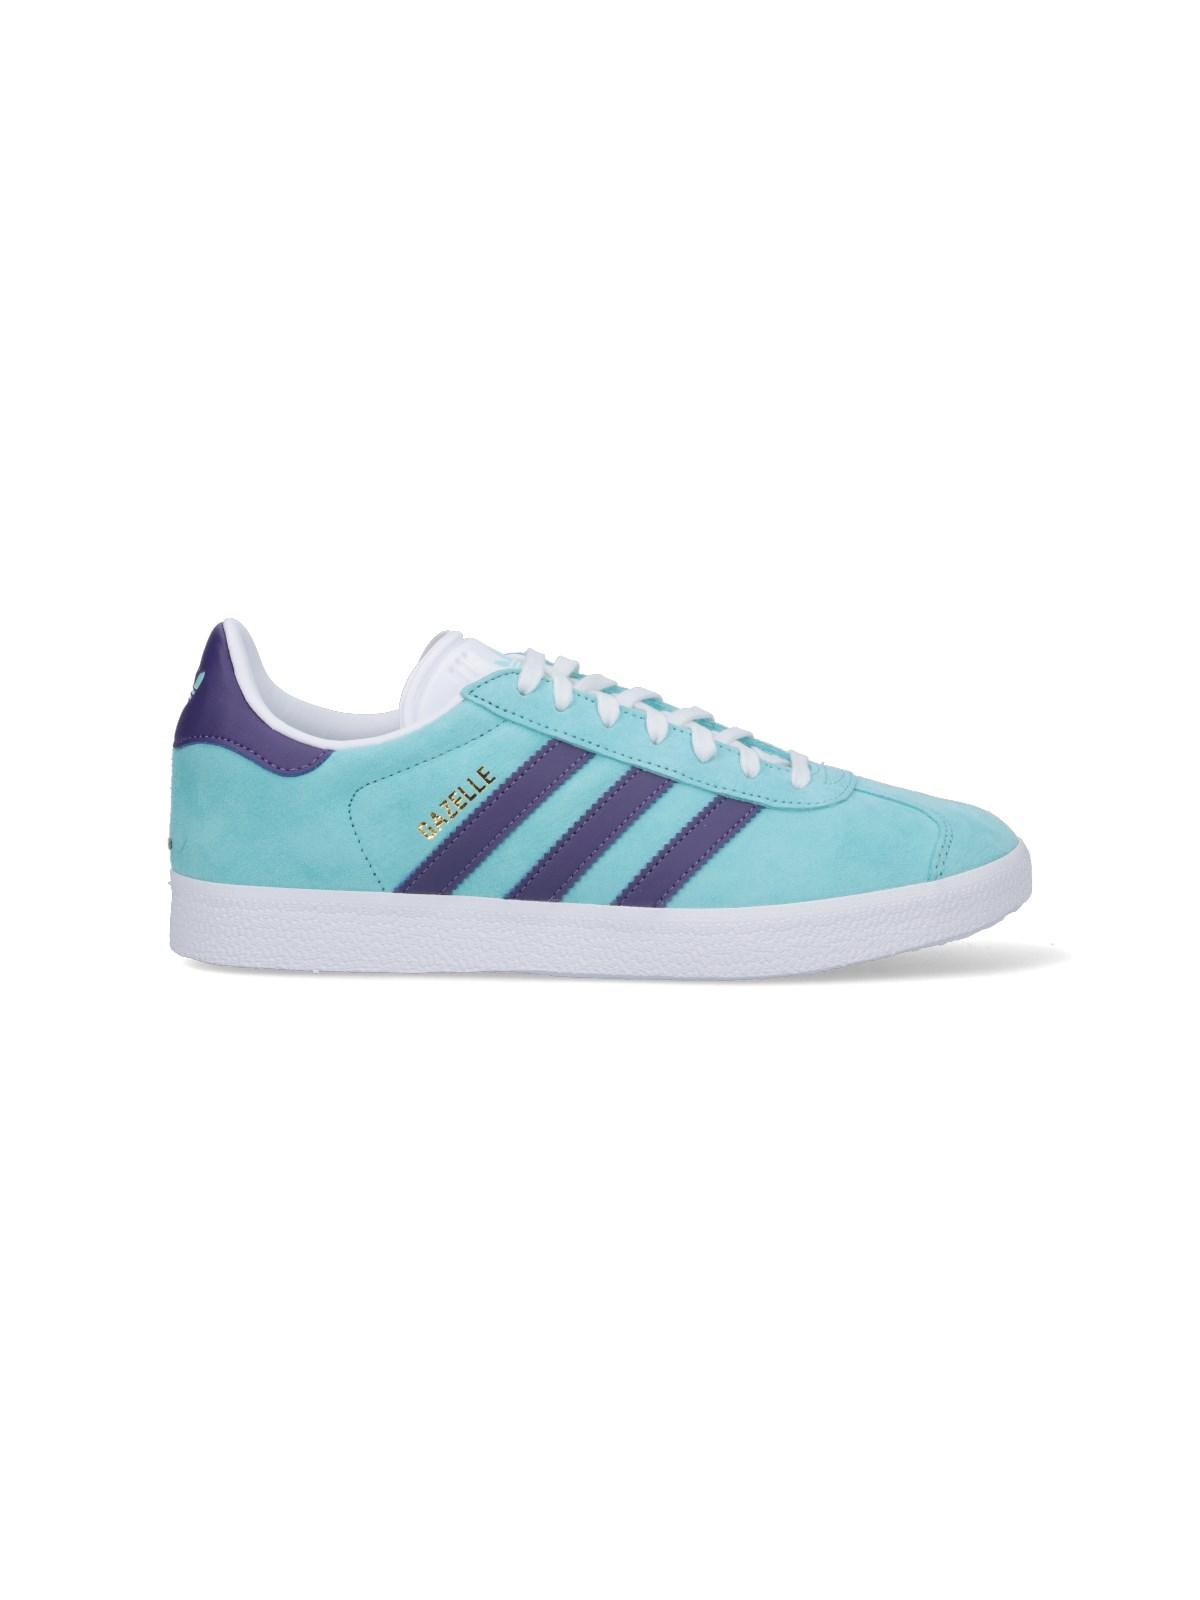 adidas Originals "gazelle" Sneakers in Blue | Lyst